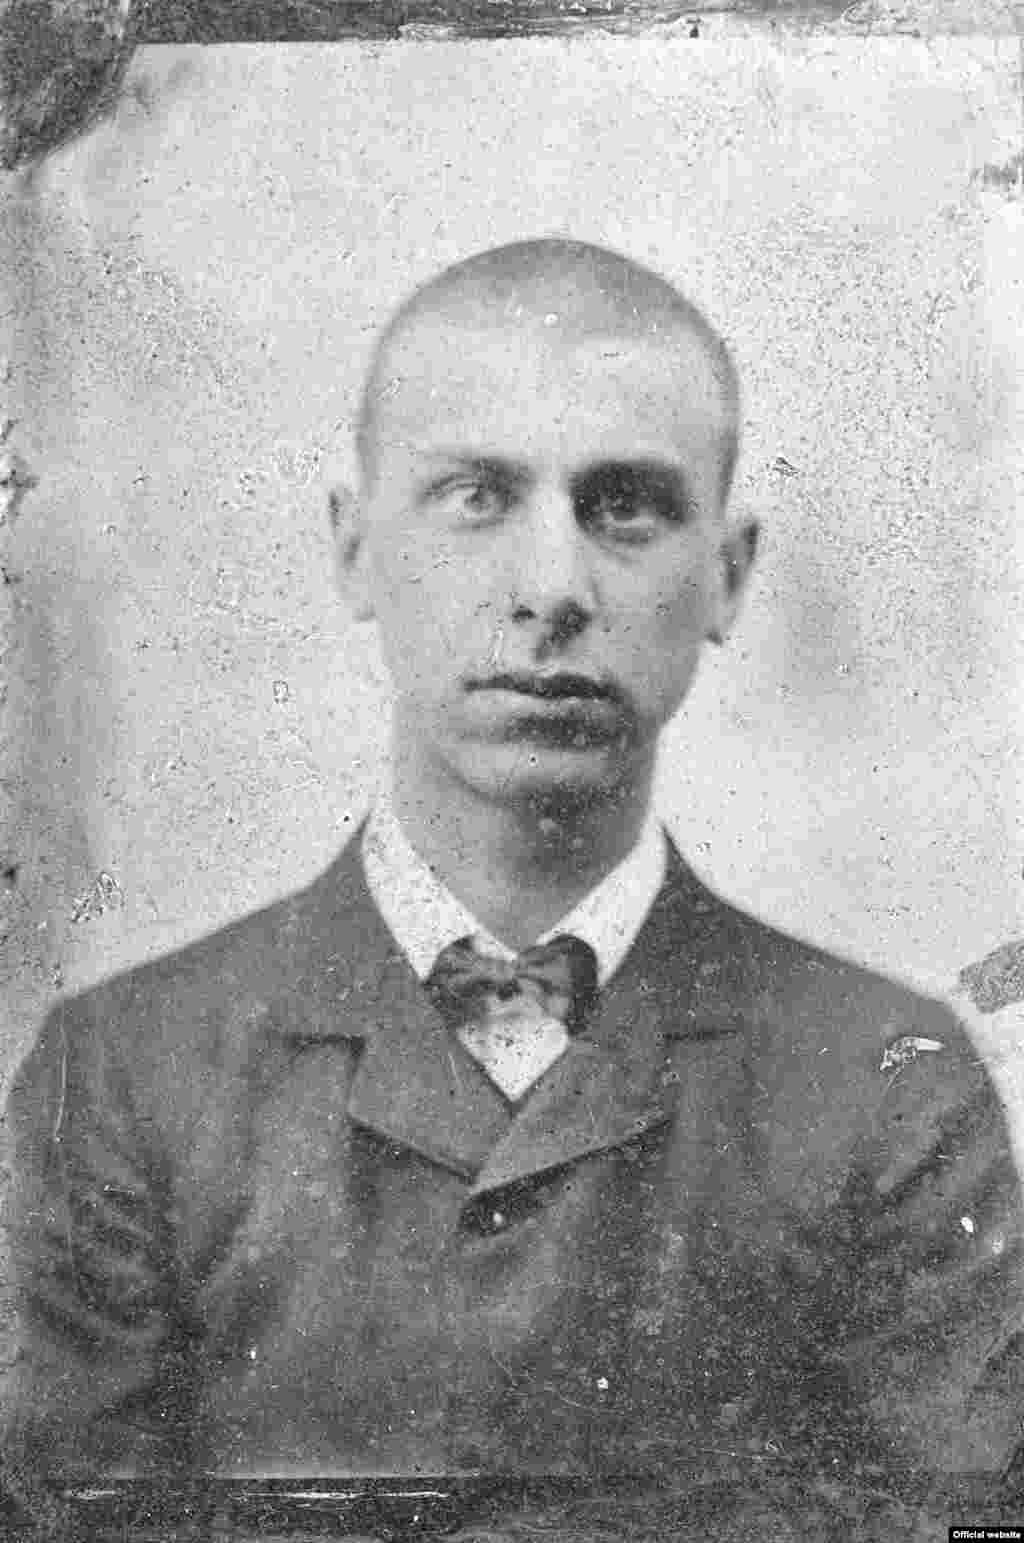 Richard Gerstl, c. 1902/03, Photo Archive Otto Breicha